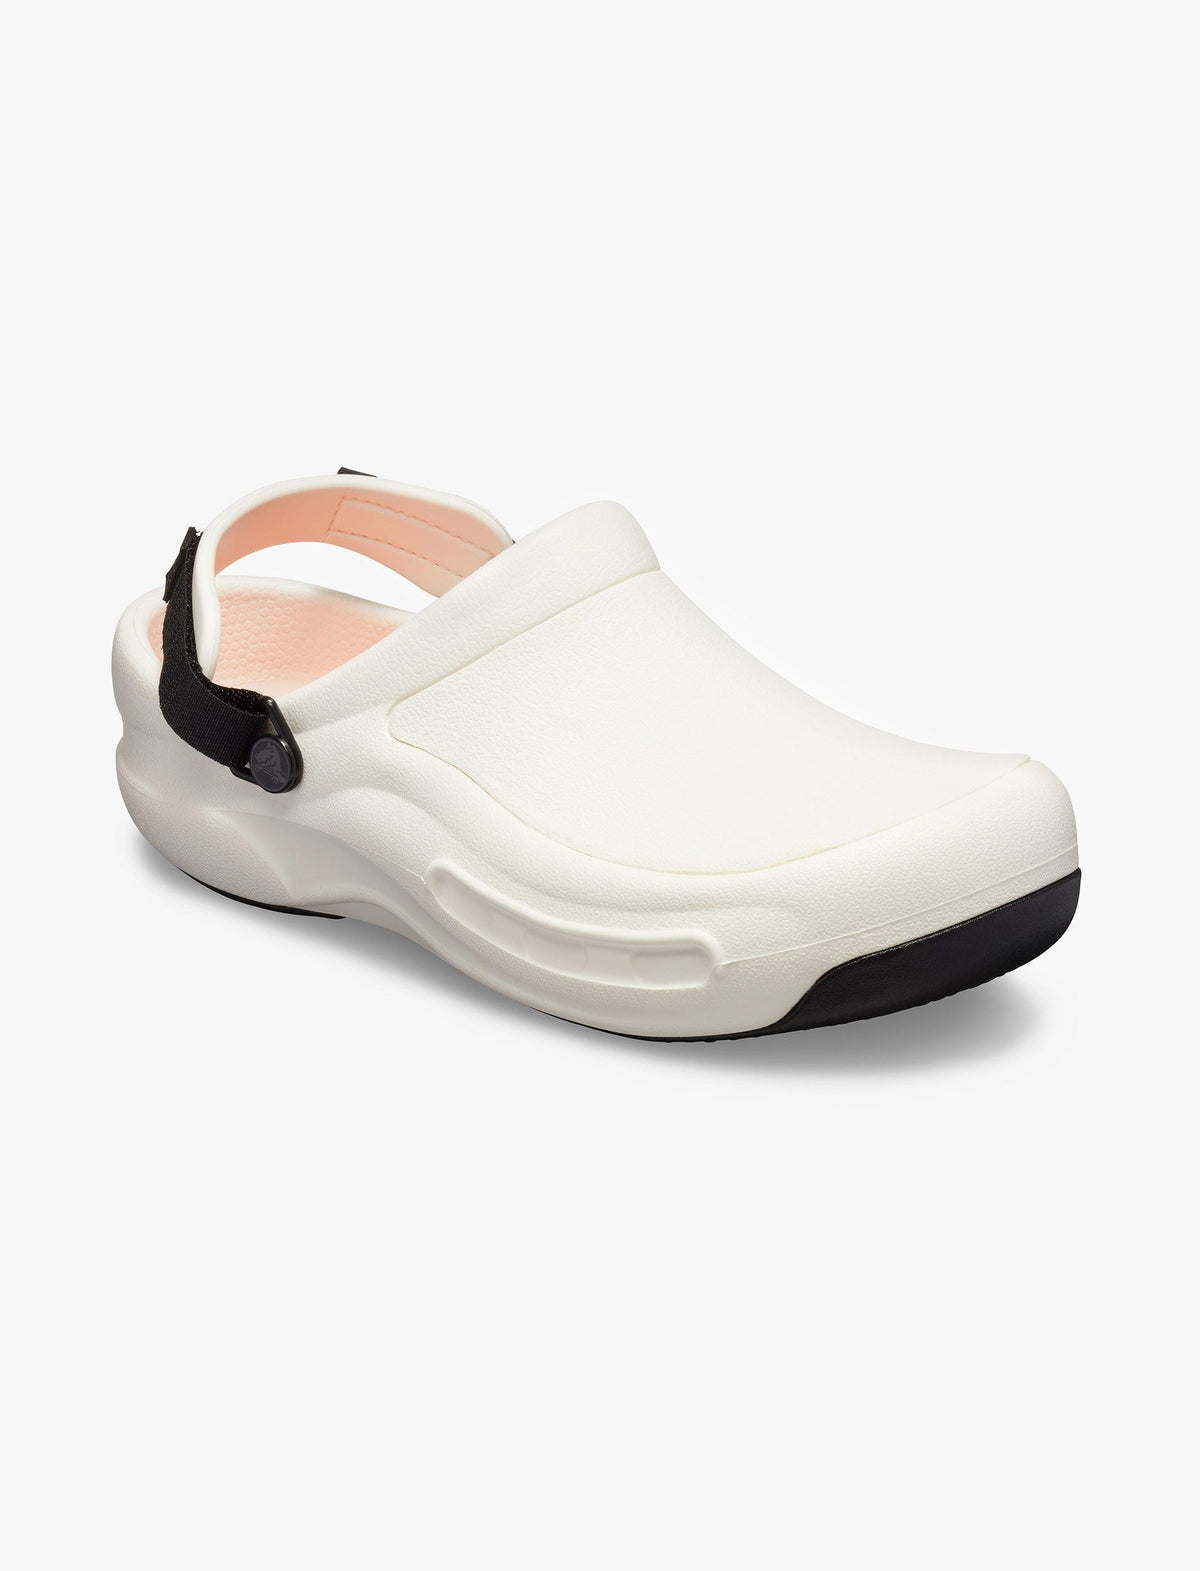 Crocs Bistro Pro LiteRid Clog - נעלי טבחים קרוקס ביסטרו סוליה מונעת החלקה בצבע לבן-Crocs-41-42-נאקו